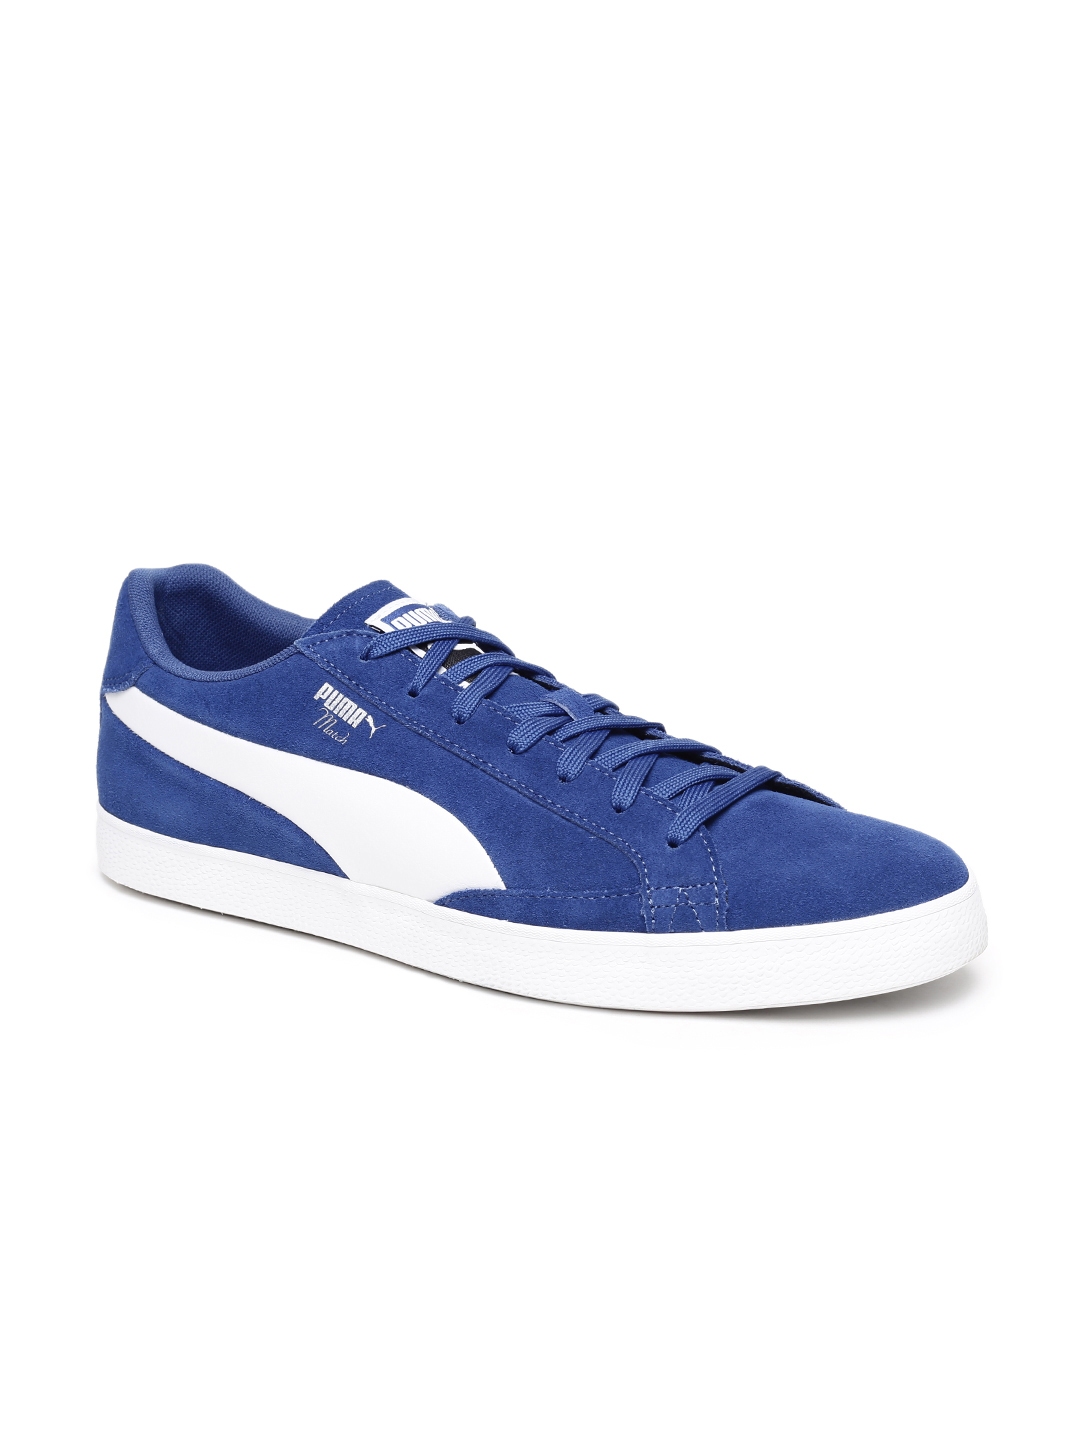 Buy Puma Men Blue Sneakers - Casual Shoes for Men 7636152 | Myntra